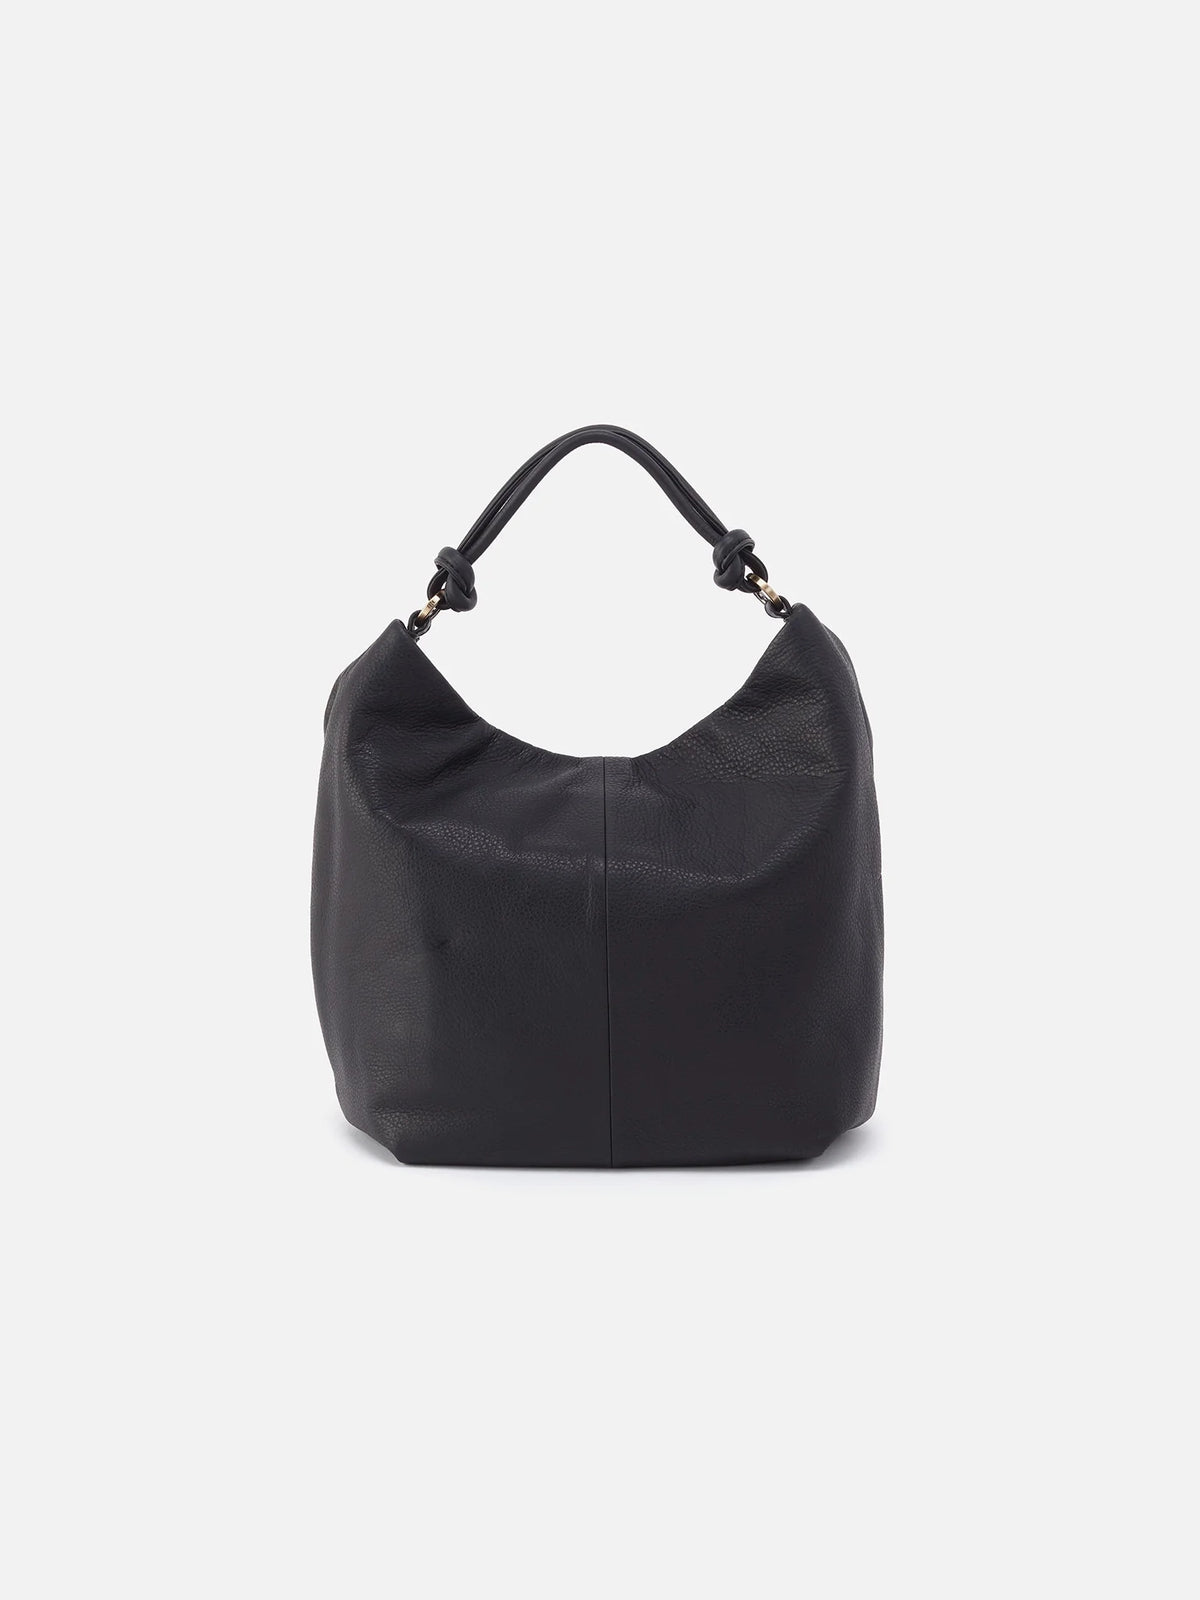 hobo linkley hobo bag soft pebbled leather in black-back view